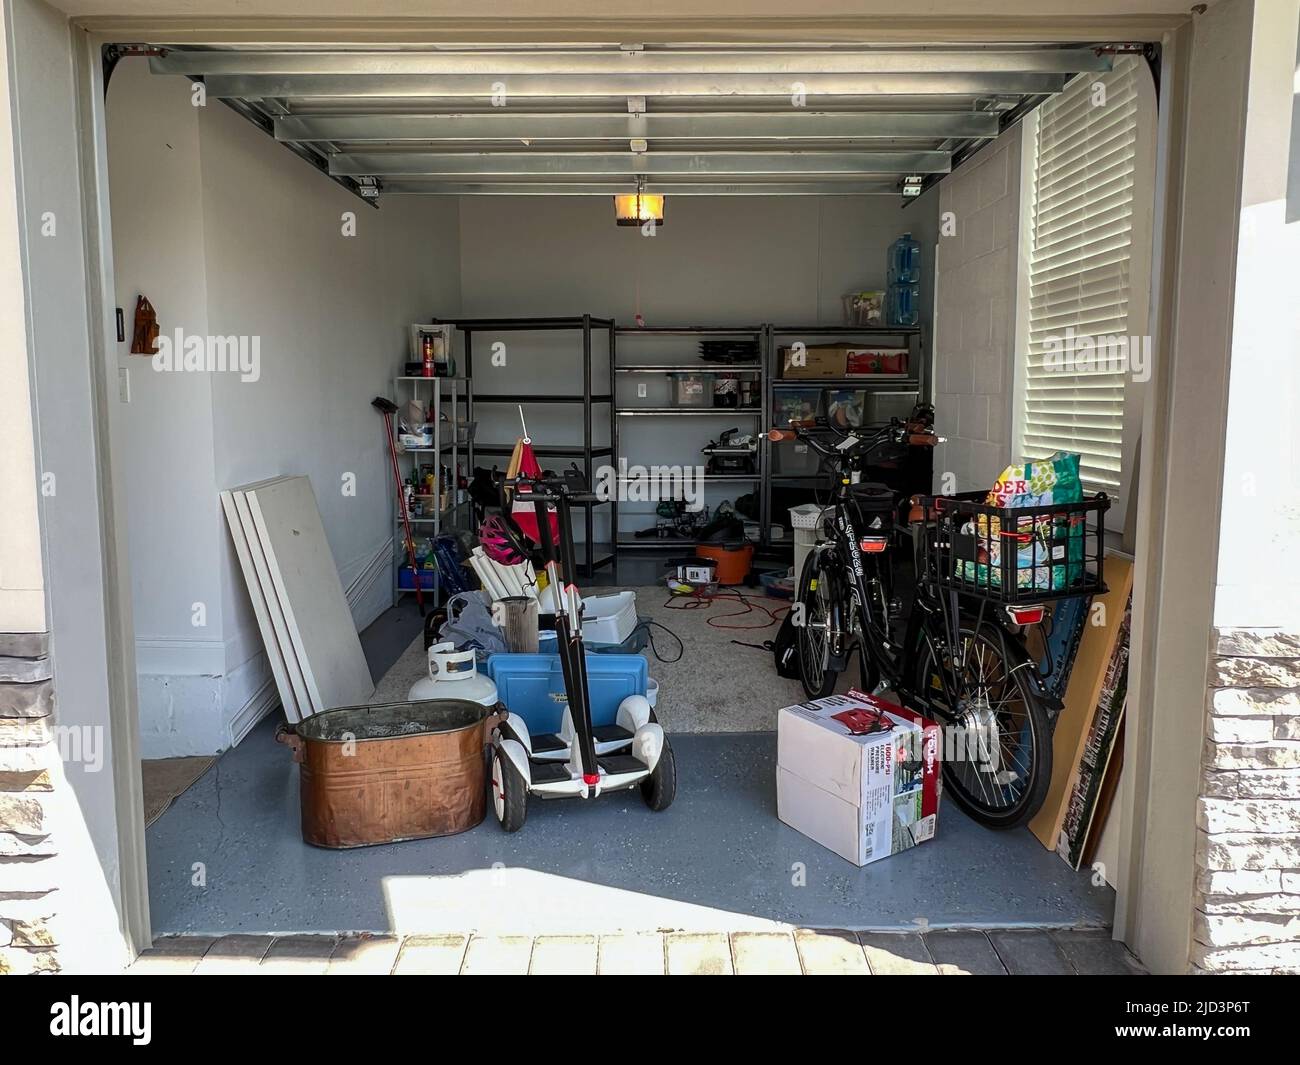 Garage Ceiling Storage Ideas by Smart Racks in Orlando, FL